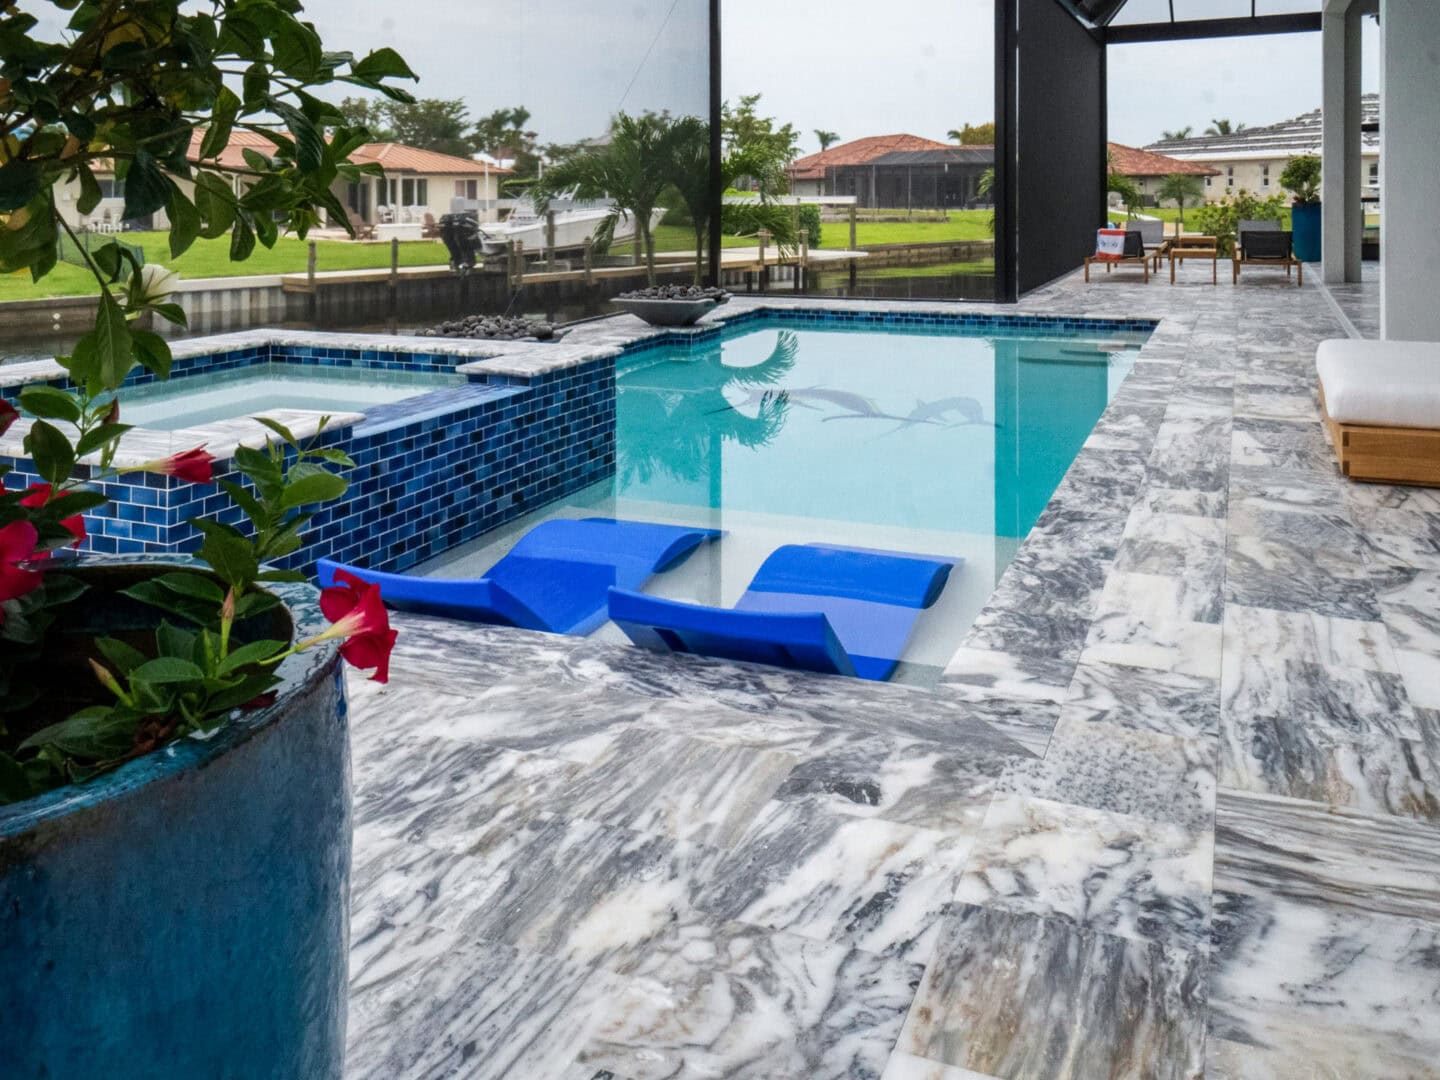 marble paved pool deck